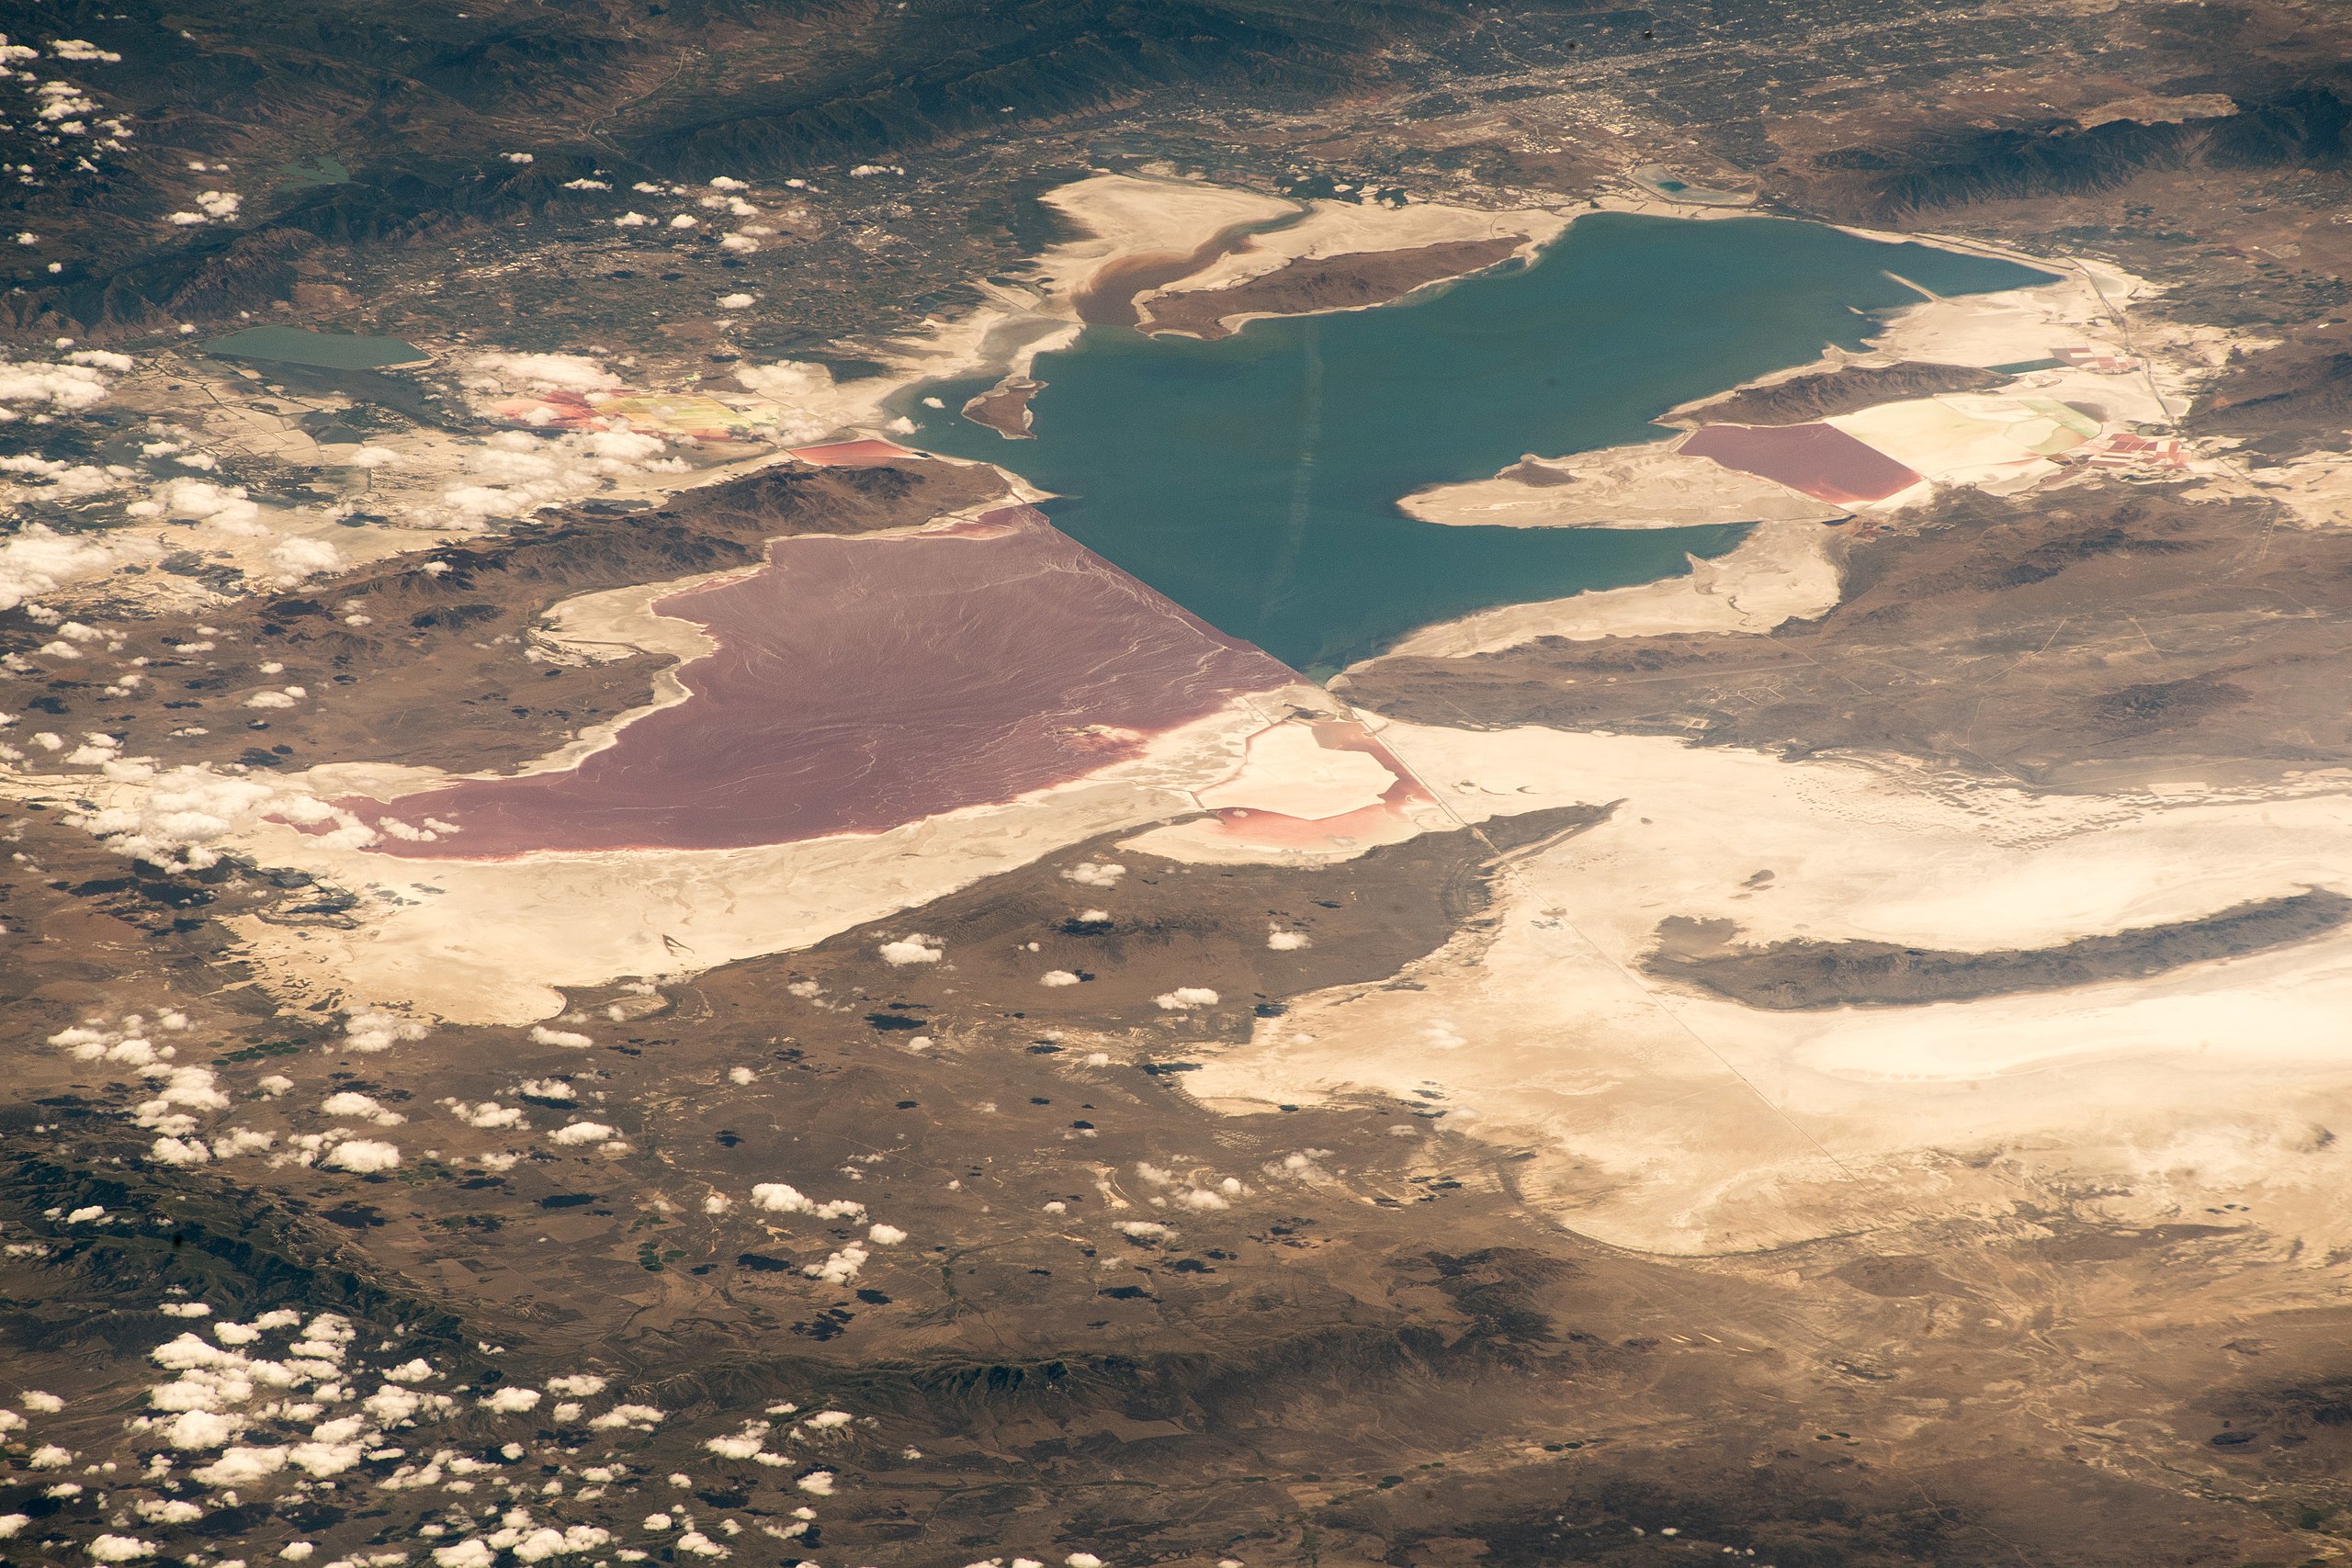 Satellite image of the Great Salt Lake